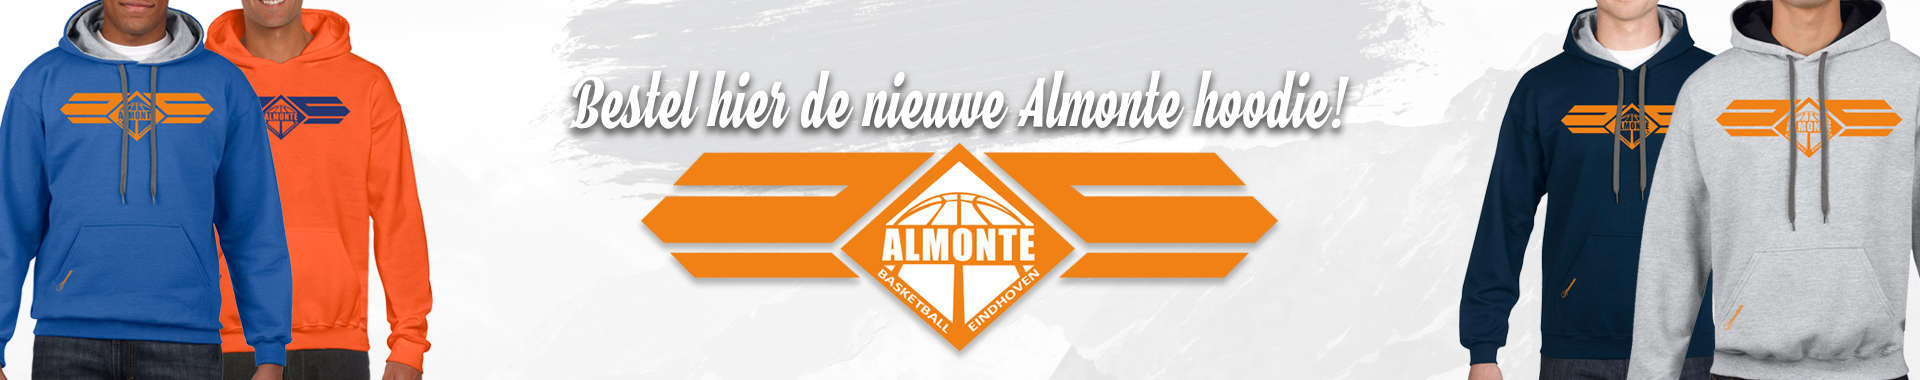 Almonte Basketball